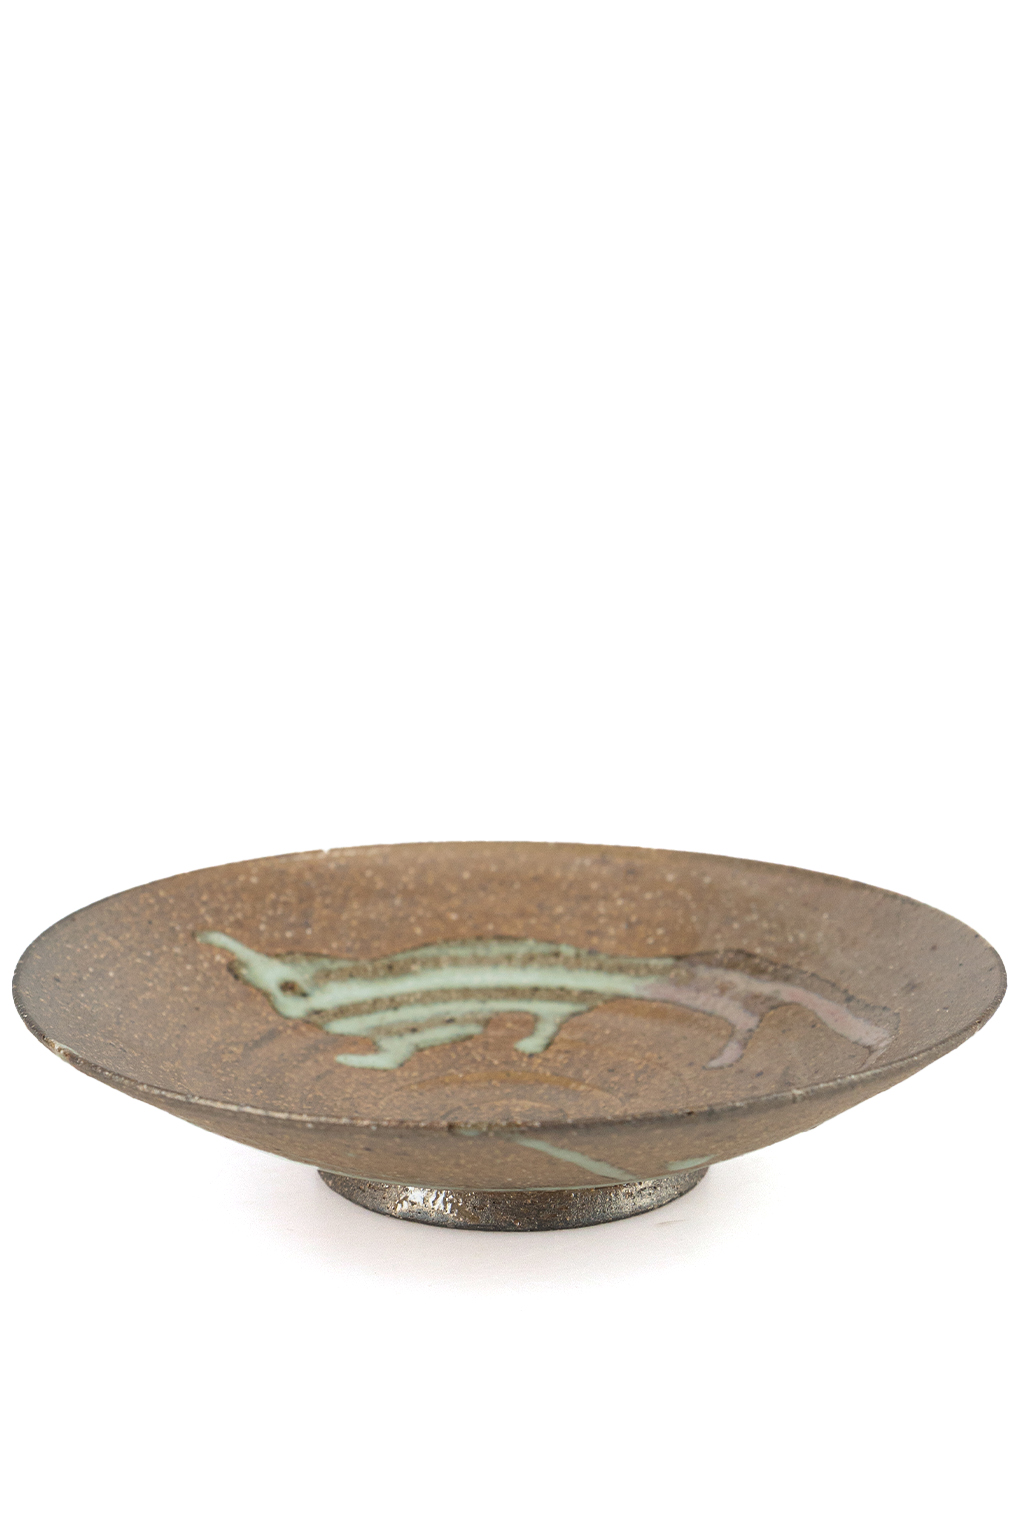 KISENYOU Ceramics Handcrafted Plate